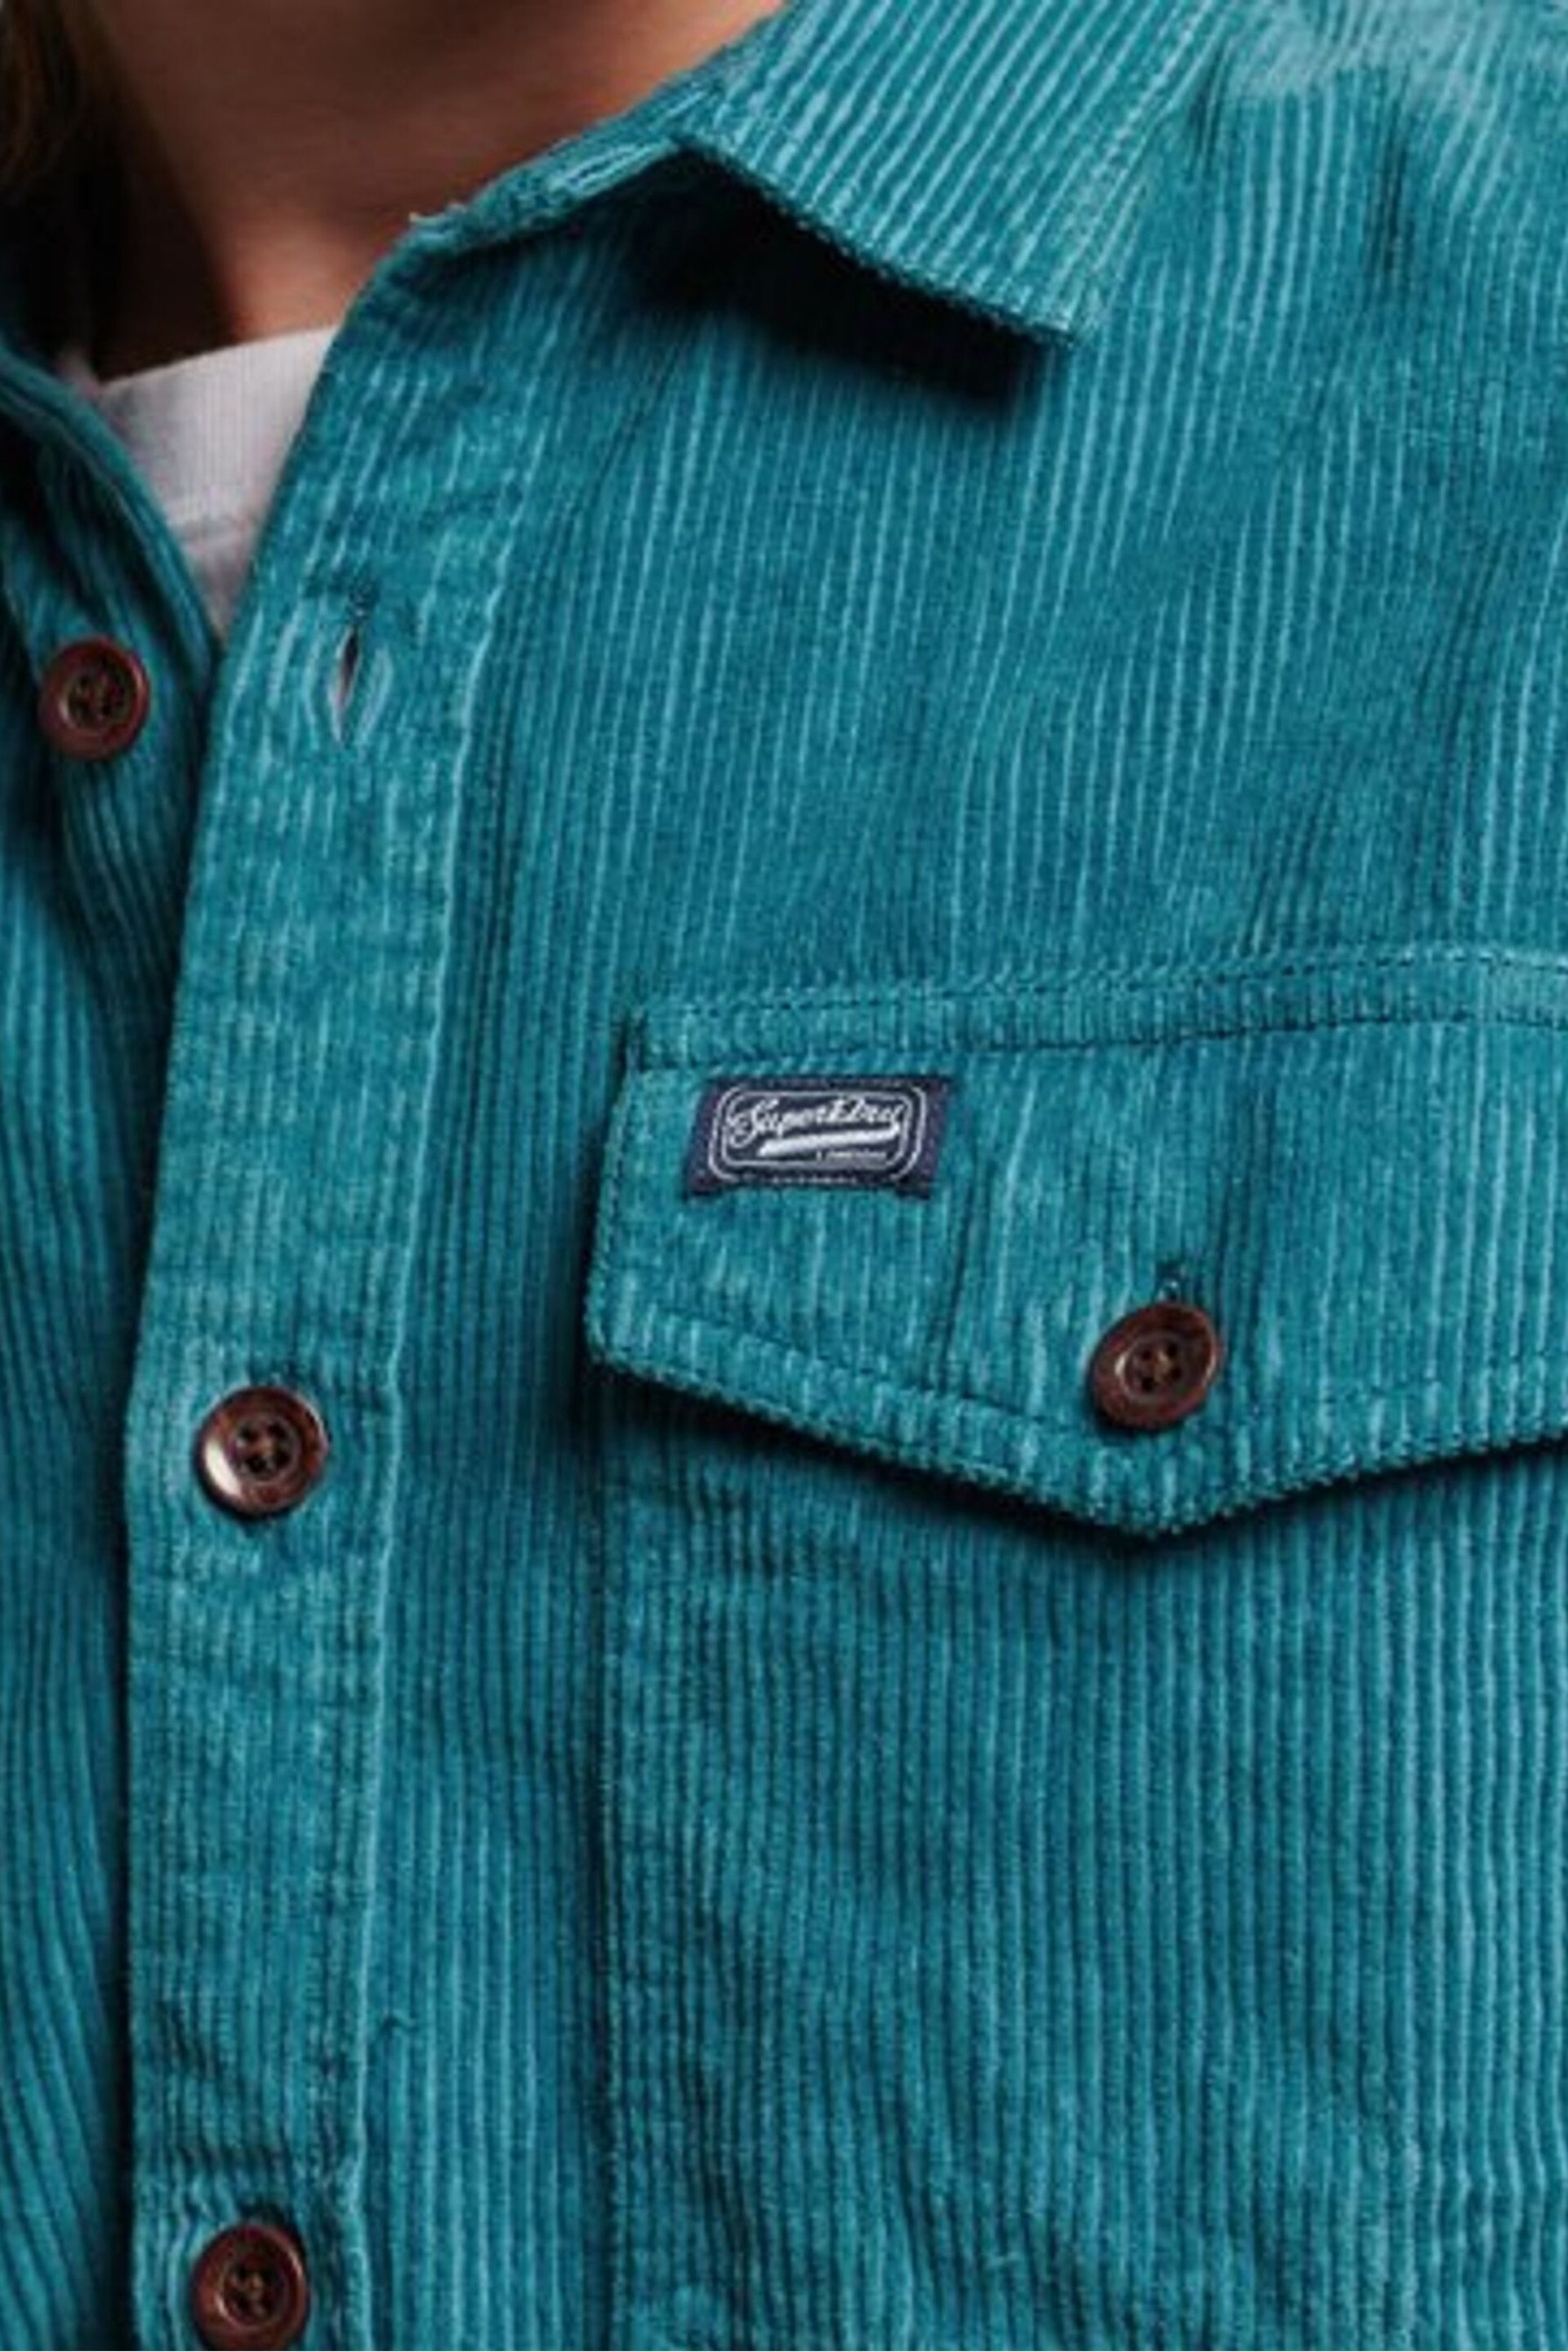 Superdry Blue Vintage Cord Overshirt - Image 5 of 7